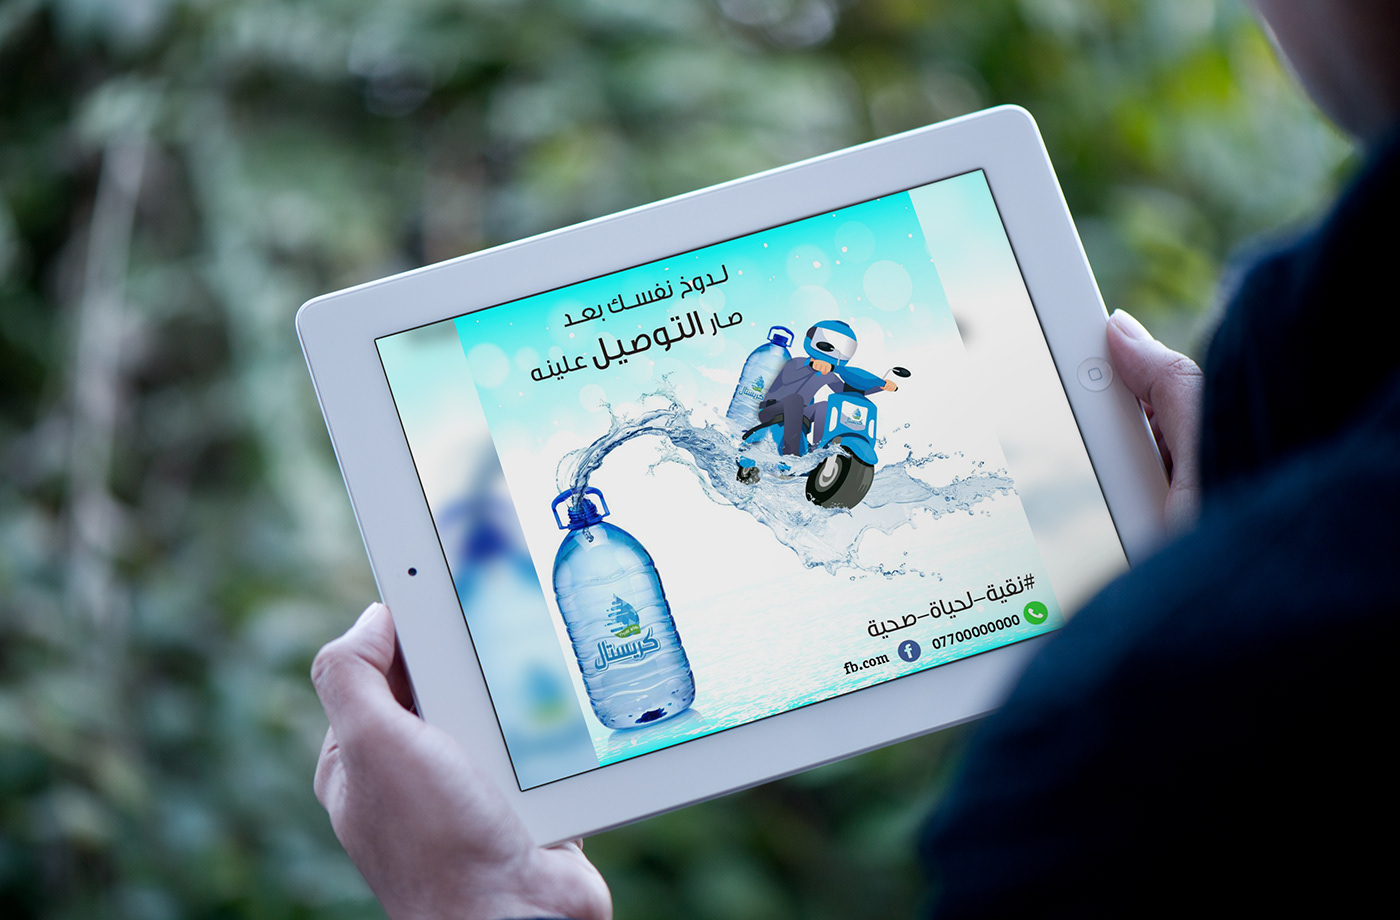 brand design logo water كريستال ماء